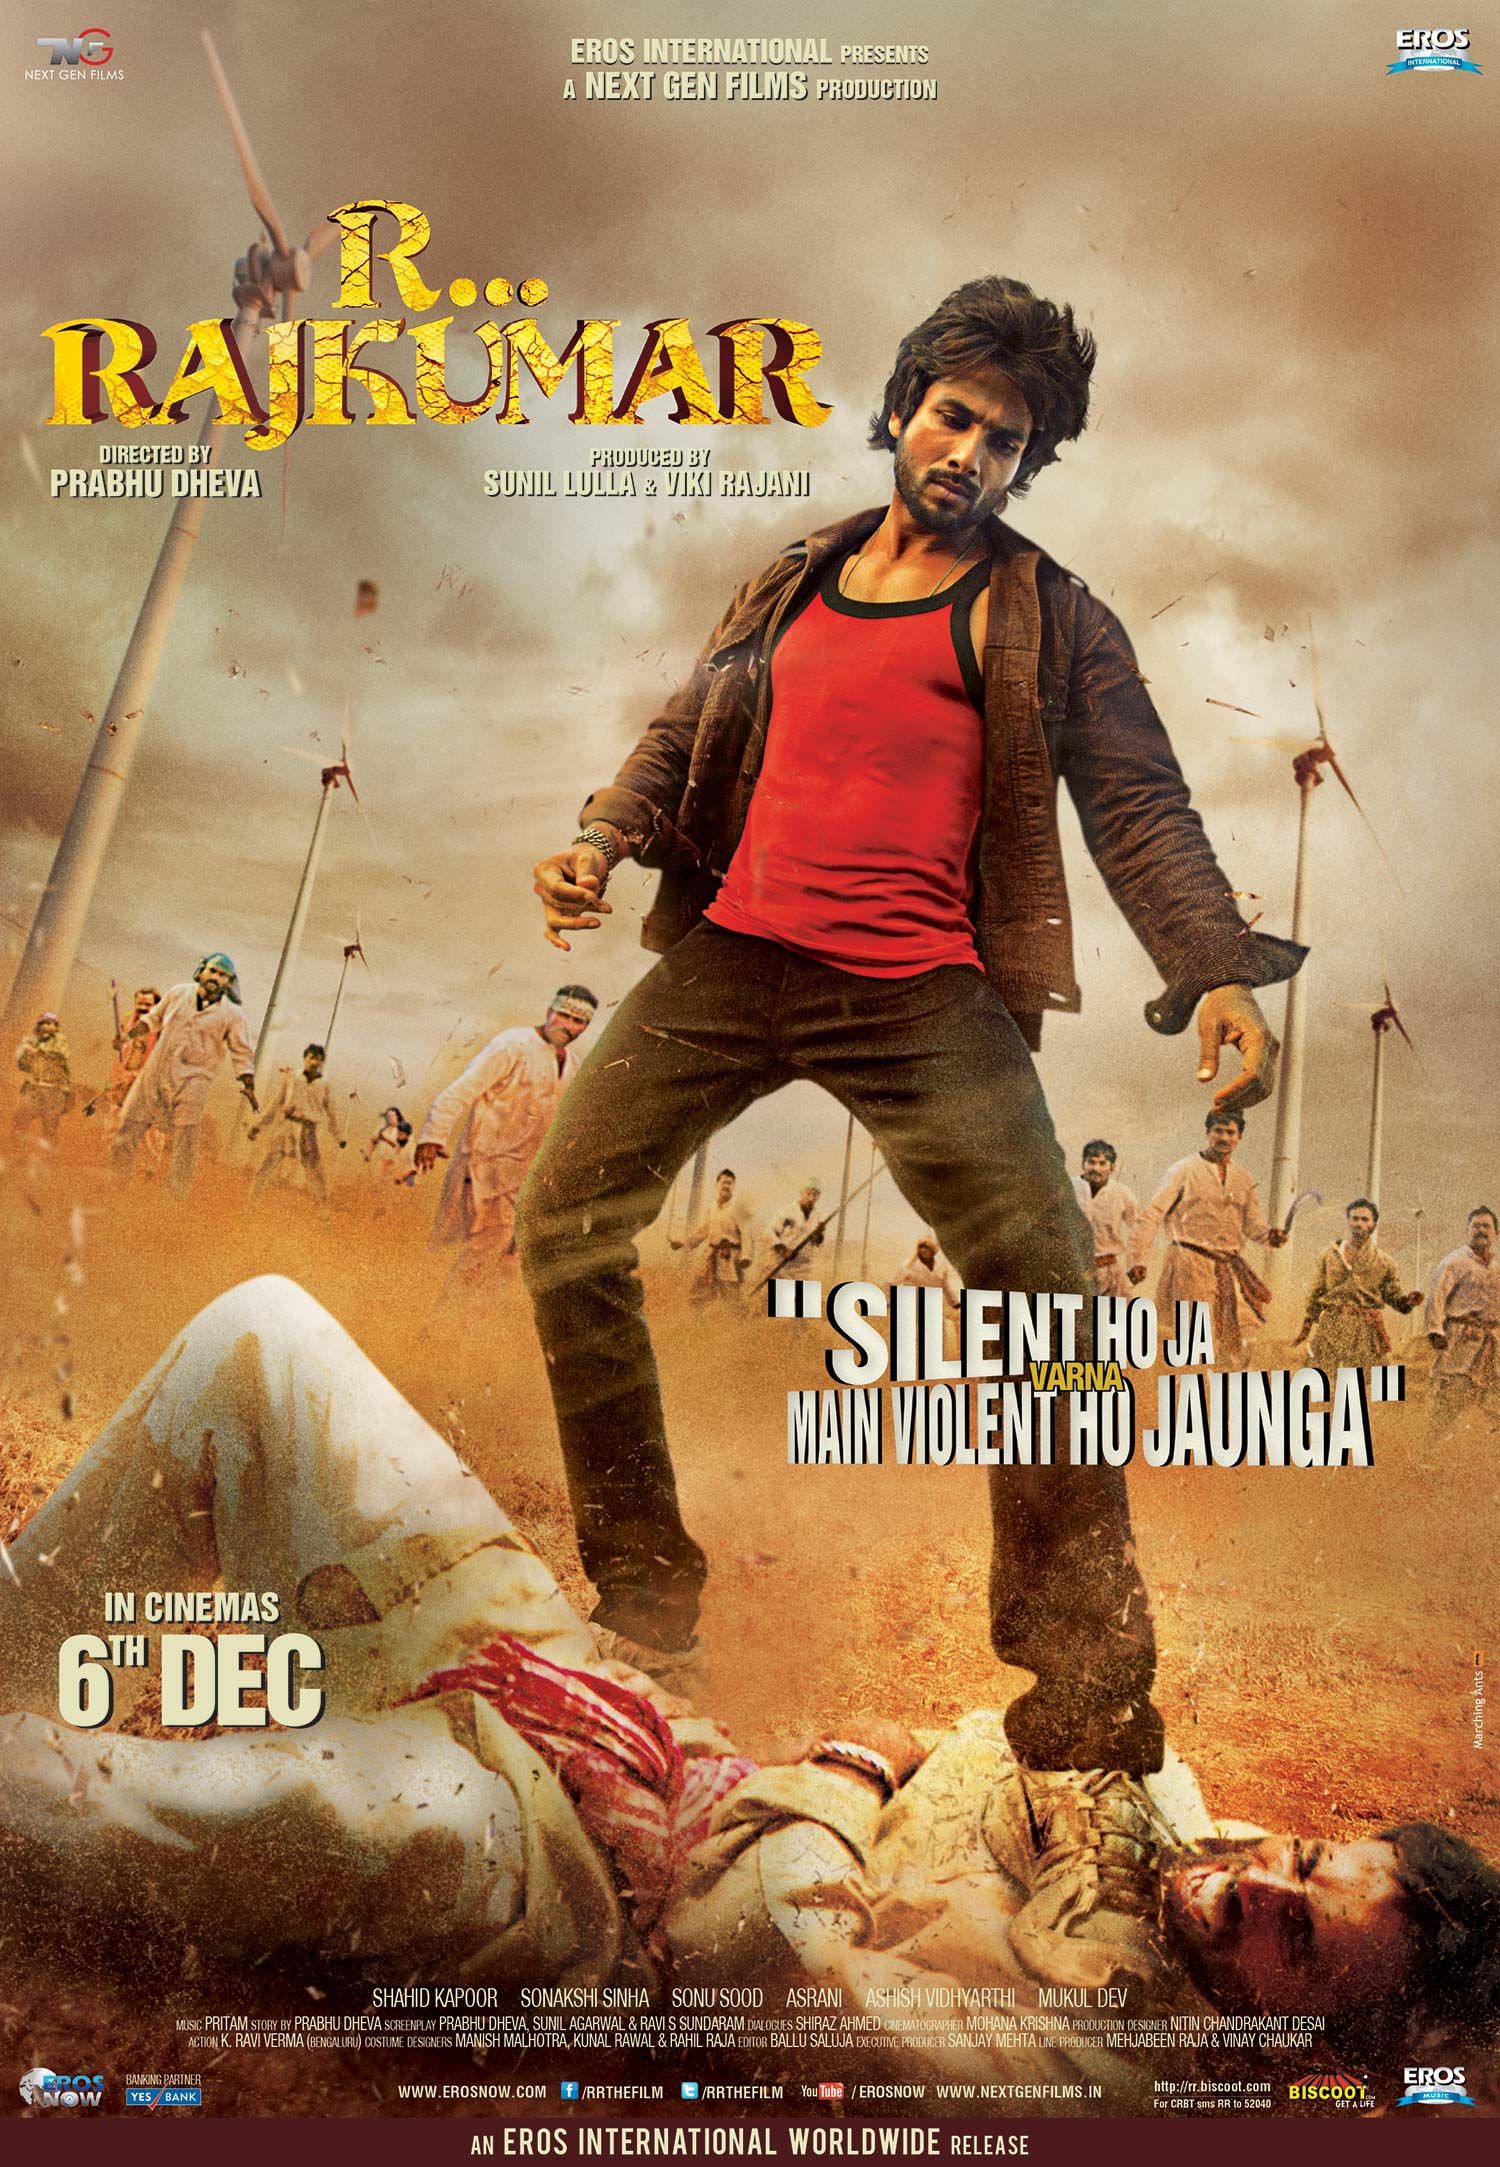 Mega Sized Movie Poster Image for R... Rajkumar (#5 of 5)